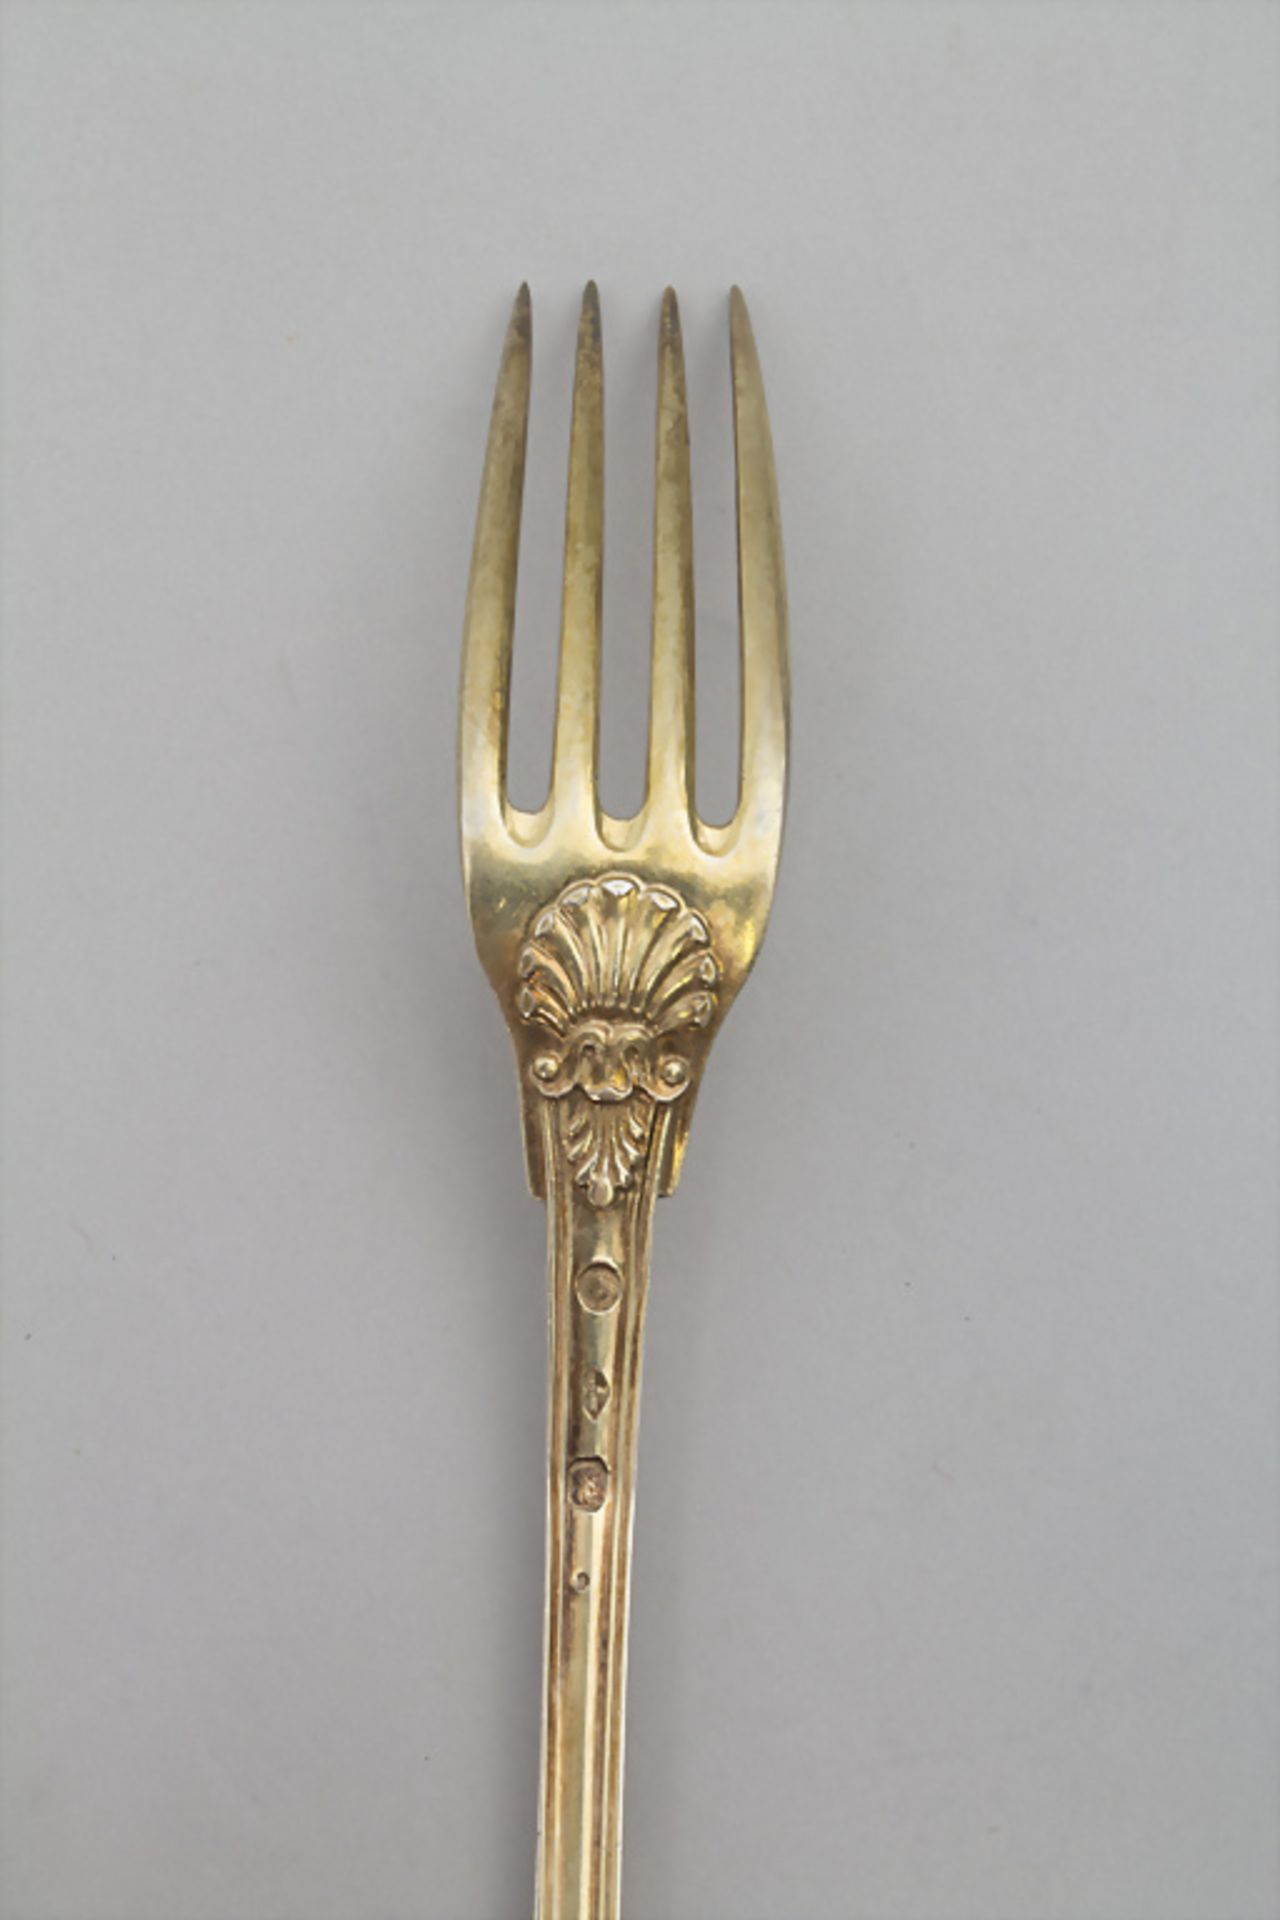 36 tlg. Silberbesteck / A 36-piece set of silver cutlery, Charles Salomon Mahler, Paris, 1824-1833 - Bild 9 aus 15